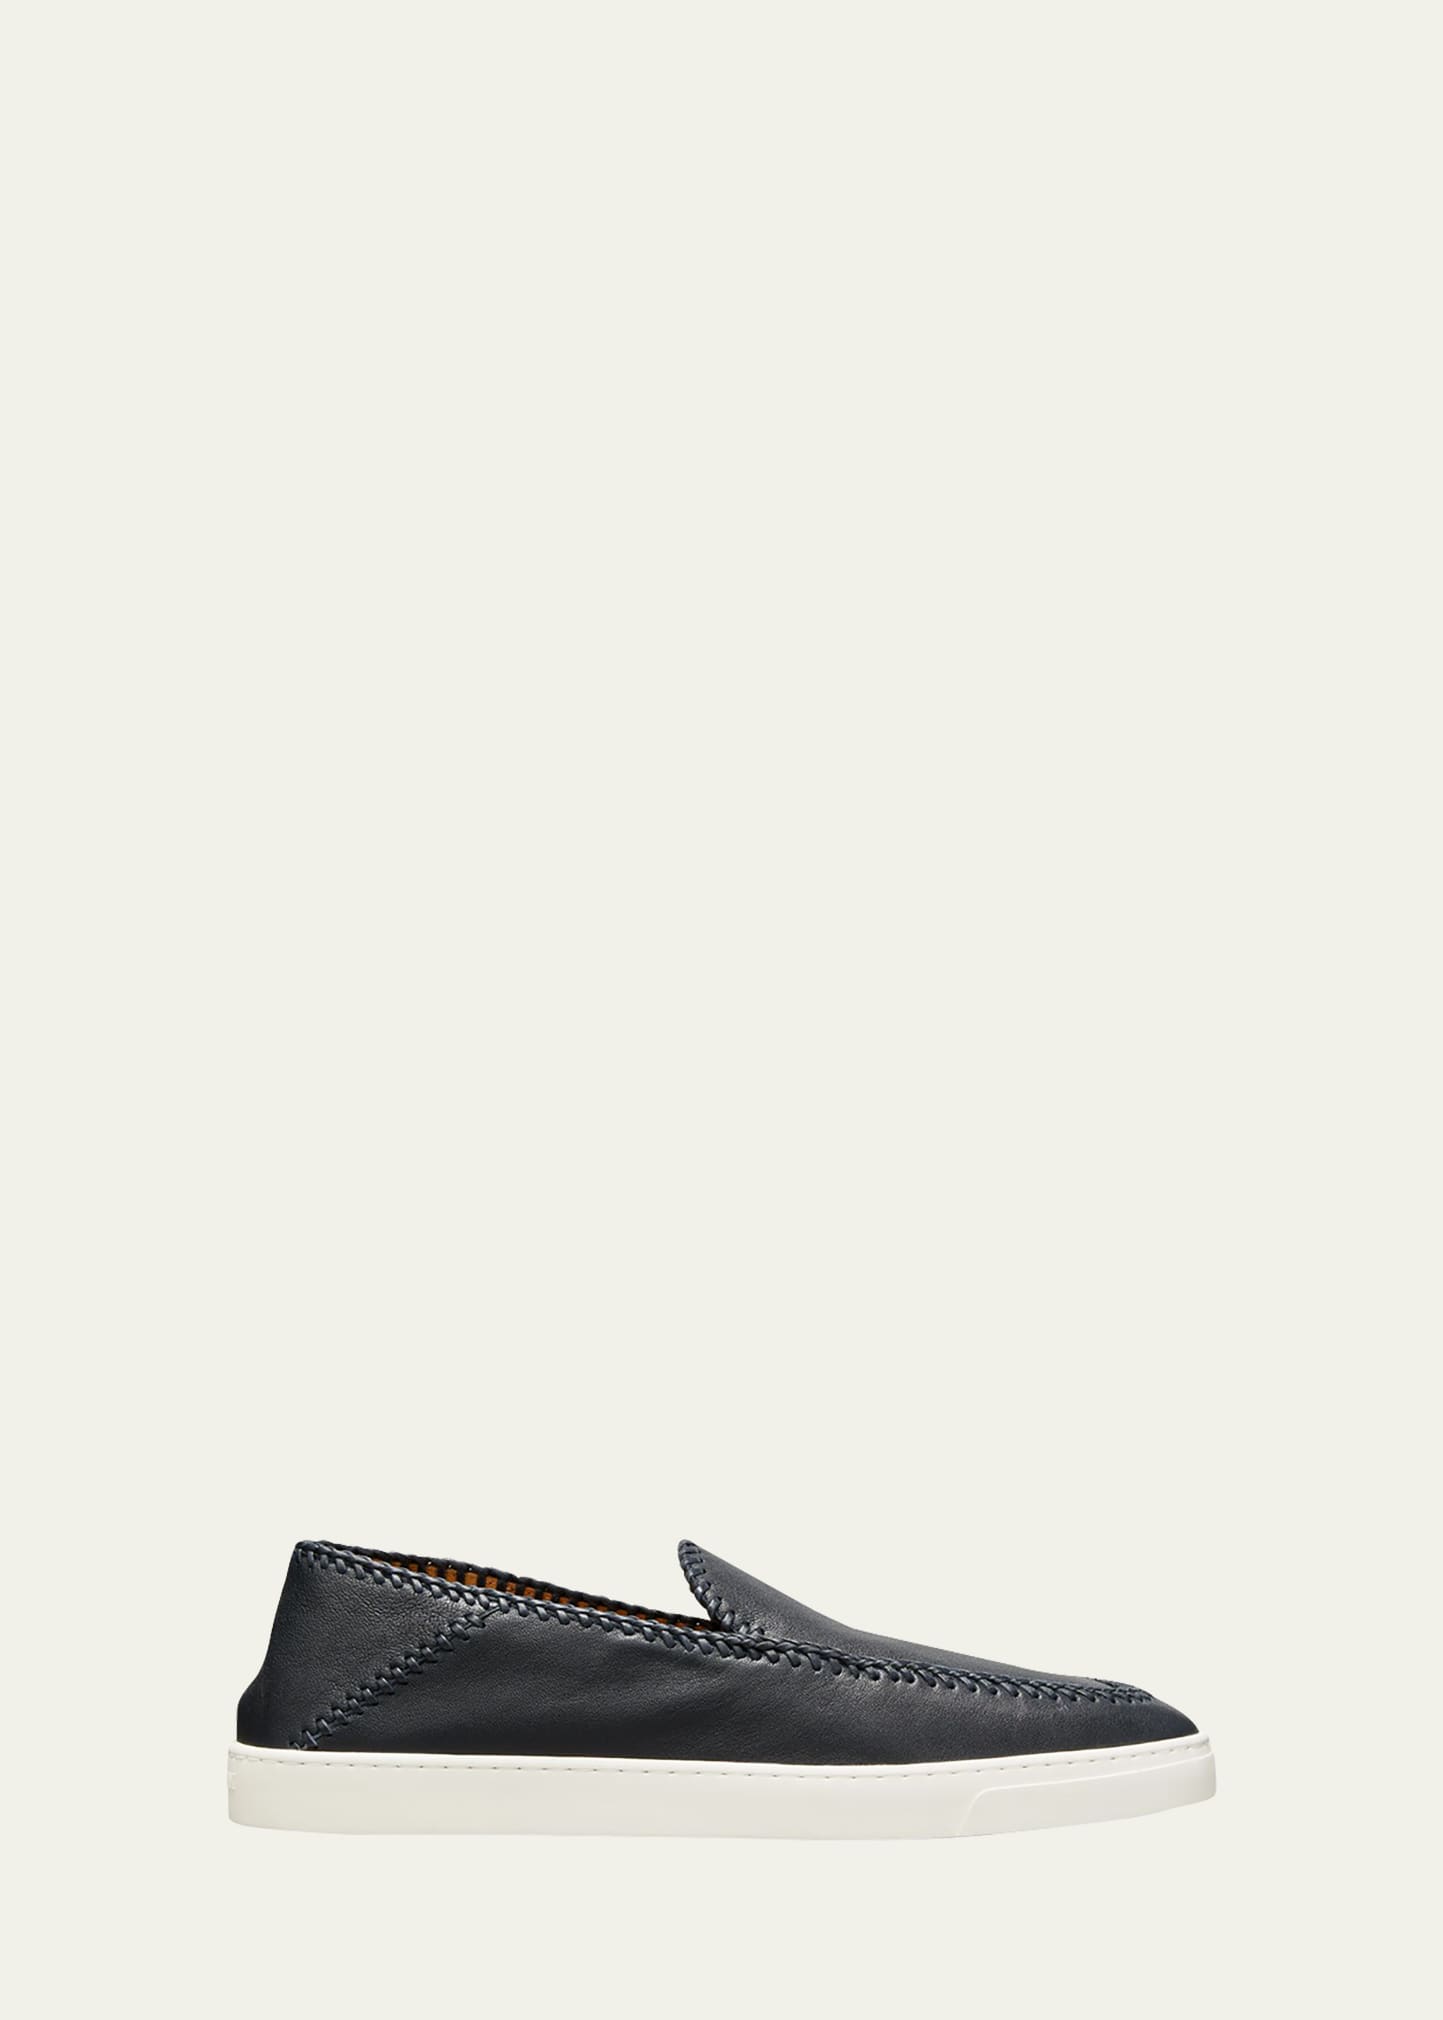 Men's Woven Leather Slip-Ons